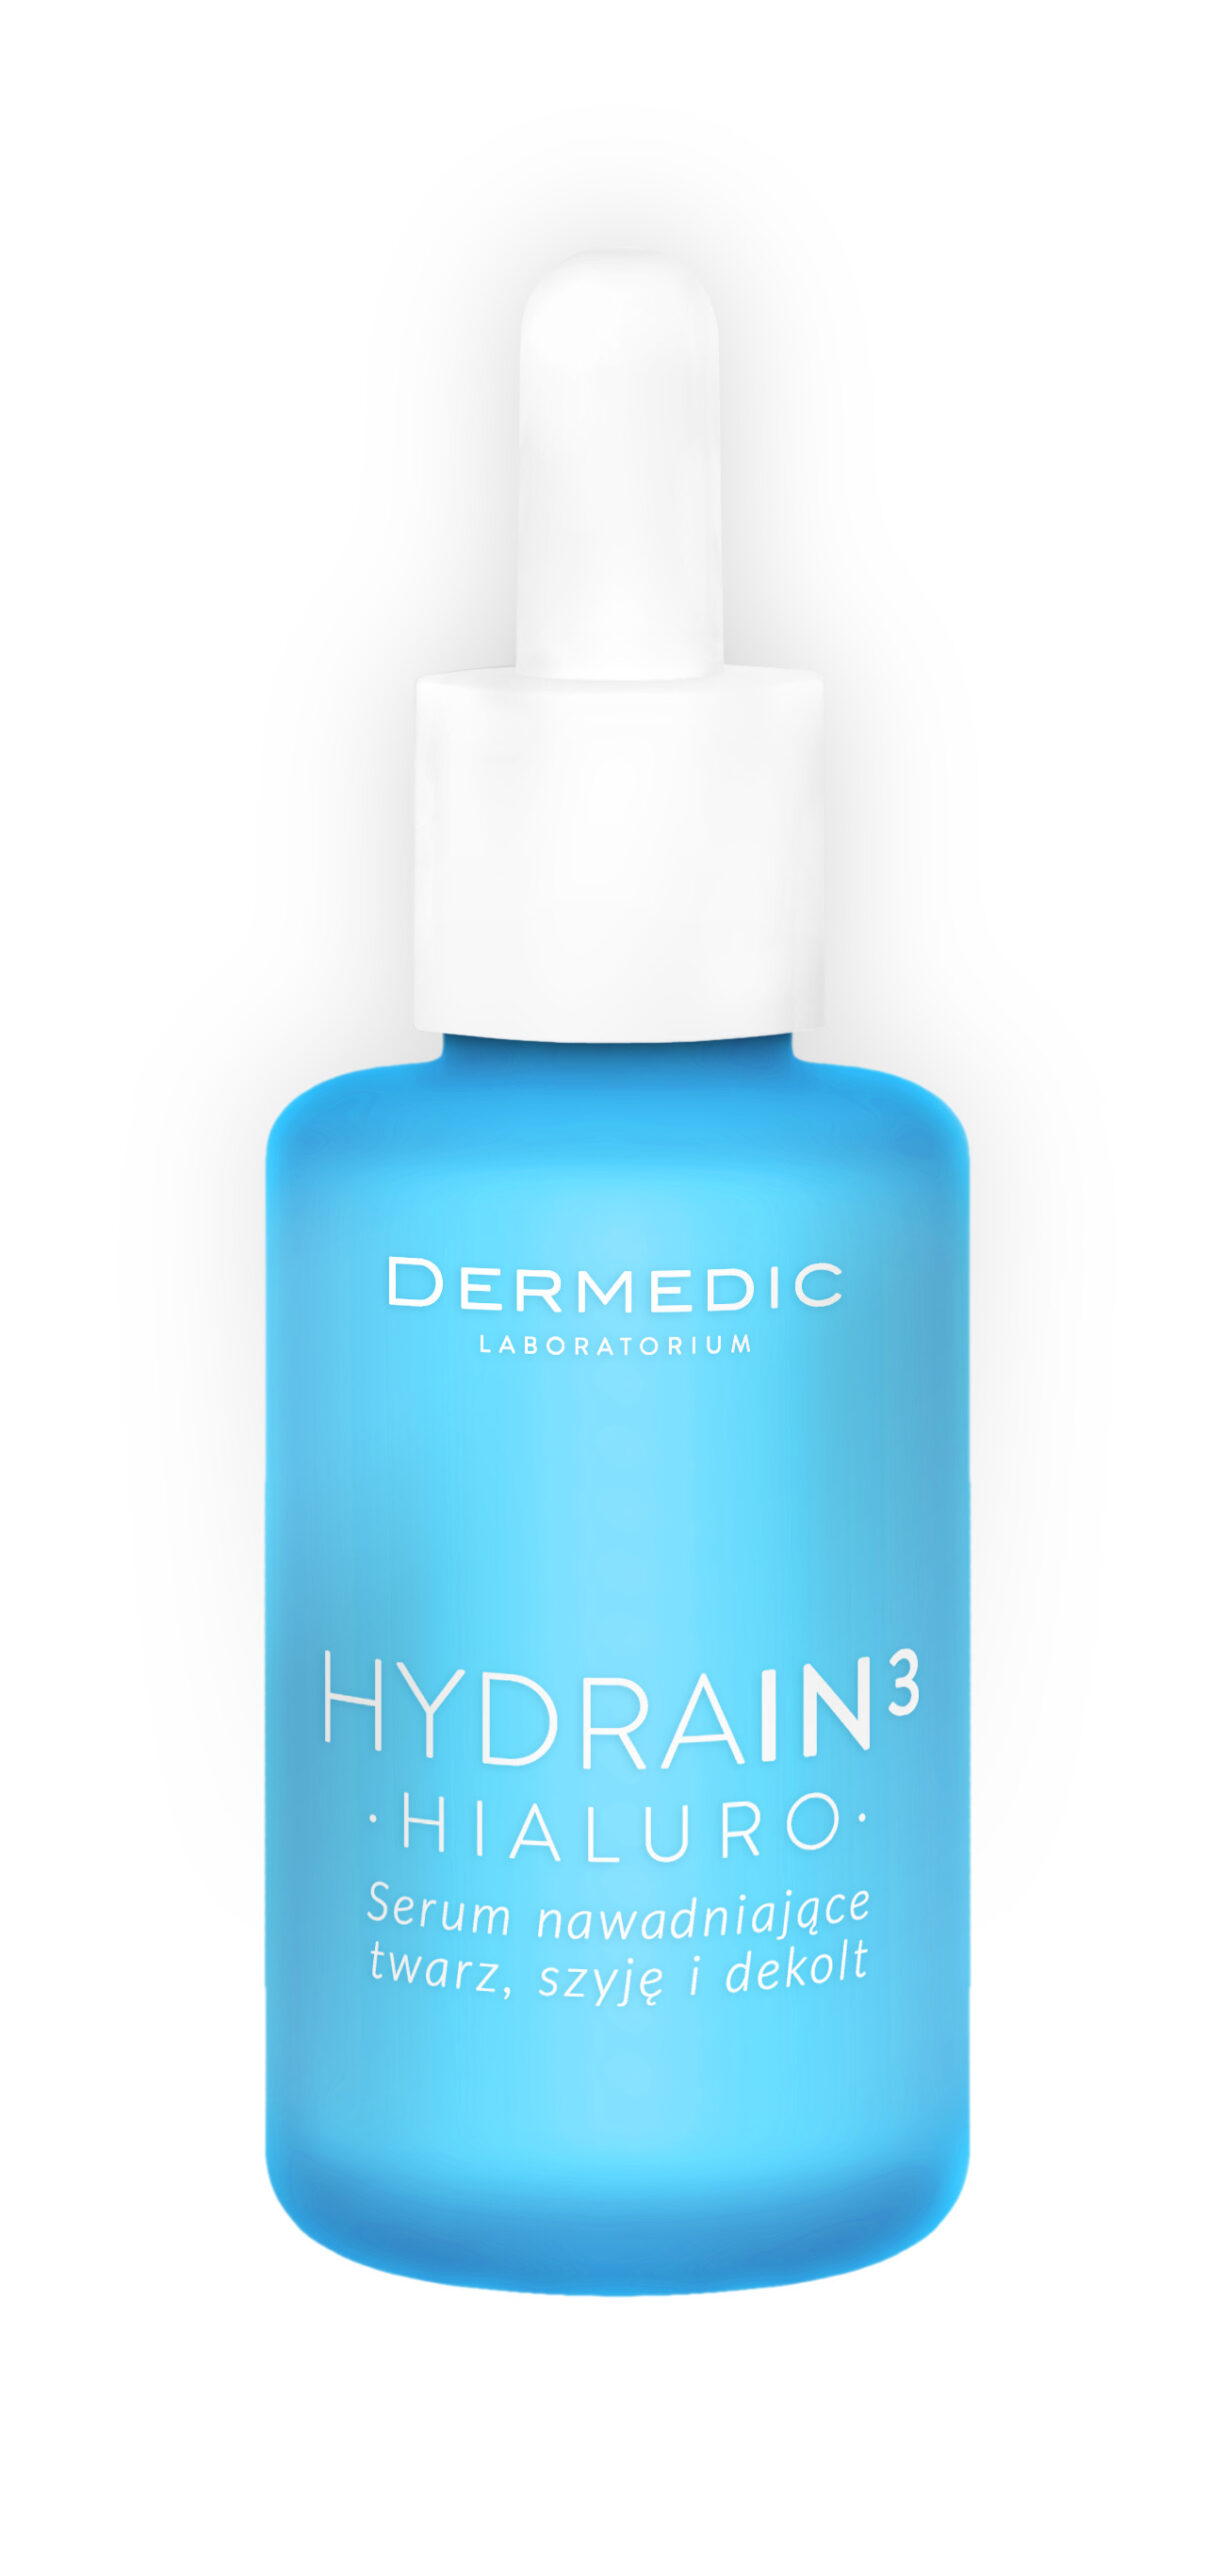 Dermedic Hydrain3 Hialuro Hydratační sérum na krk obličej a dekolt 30ml Dermedic